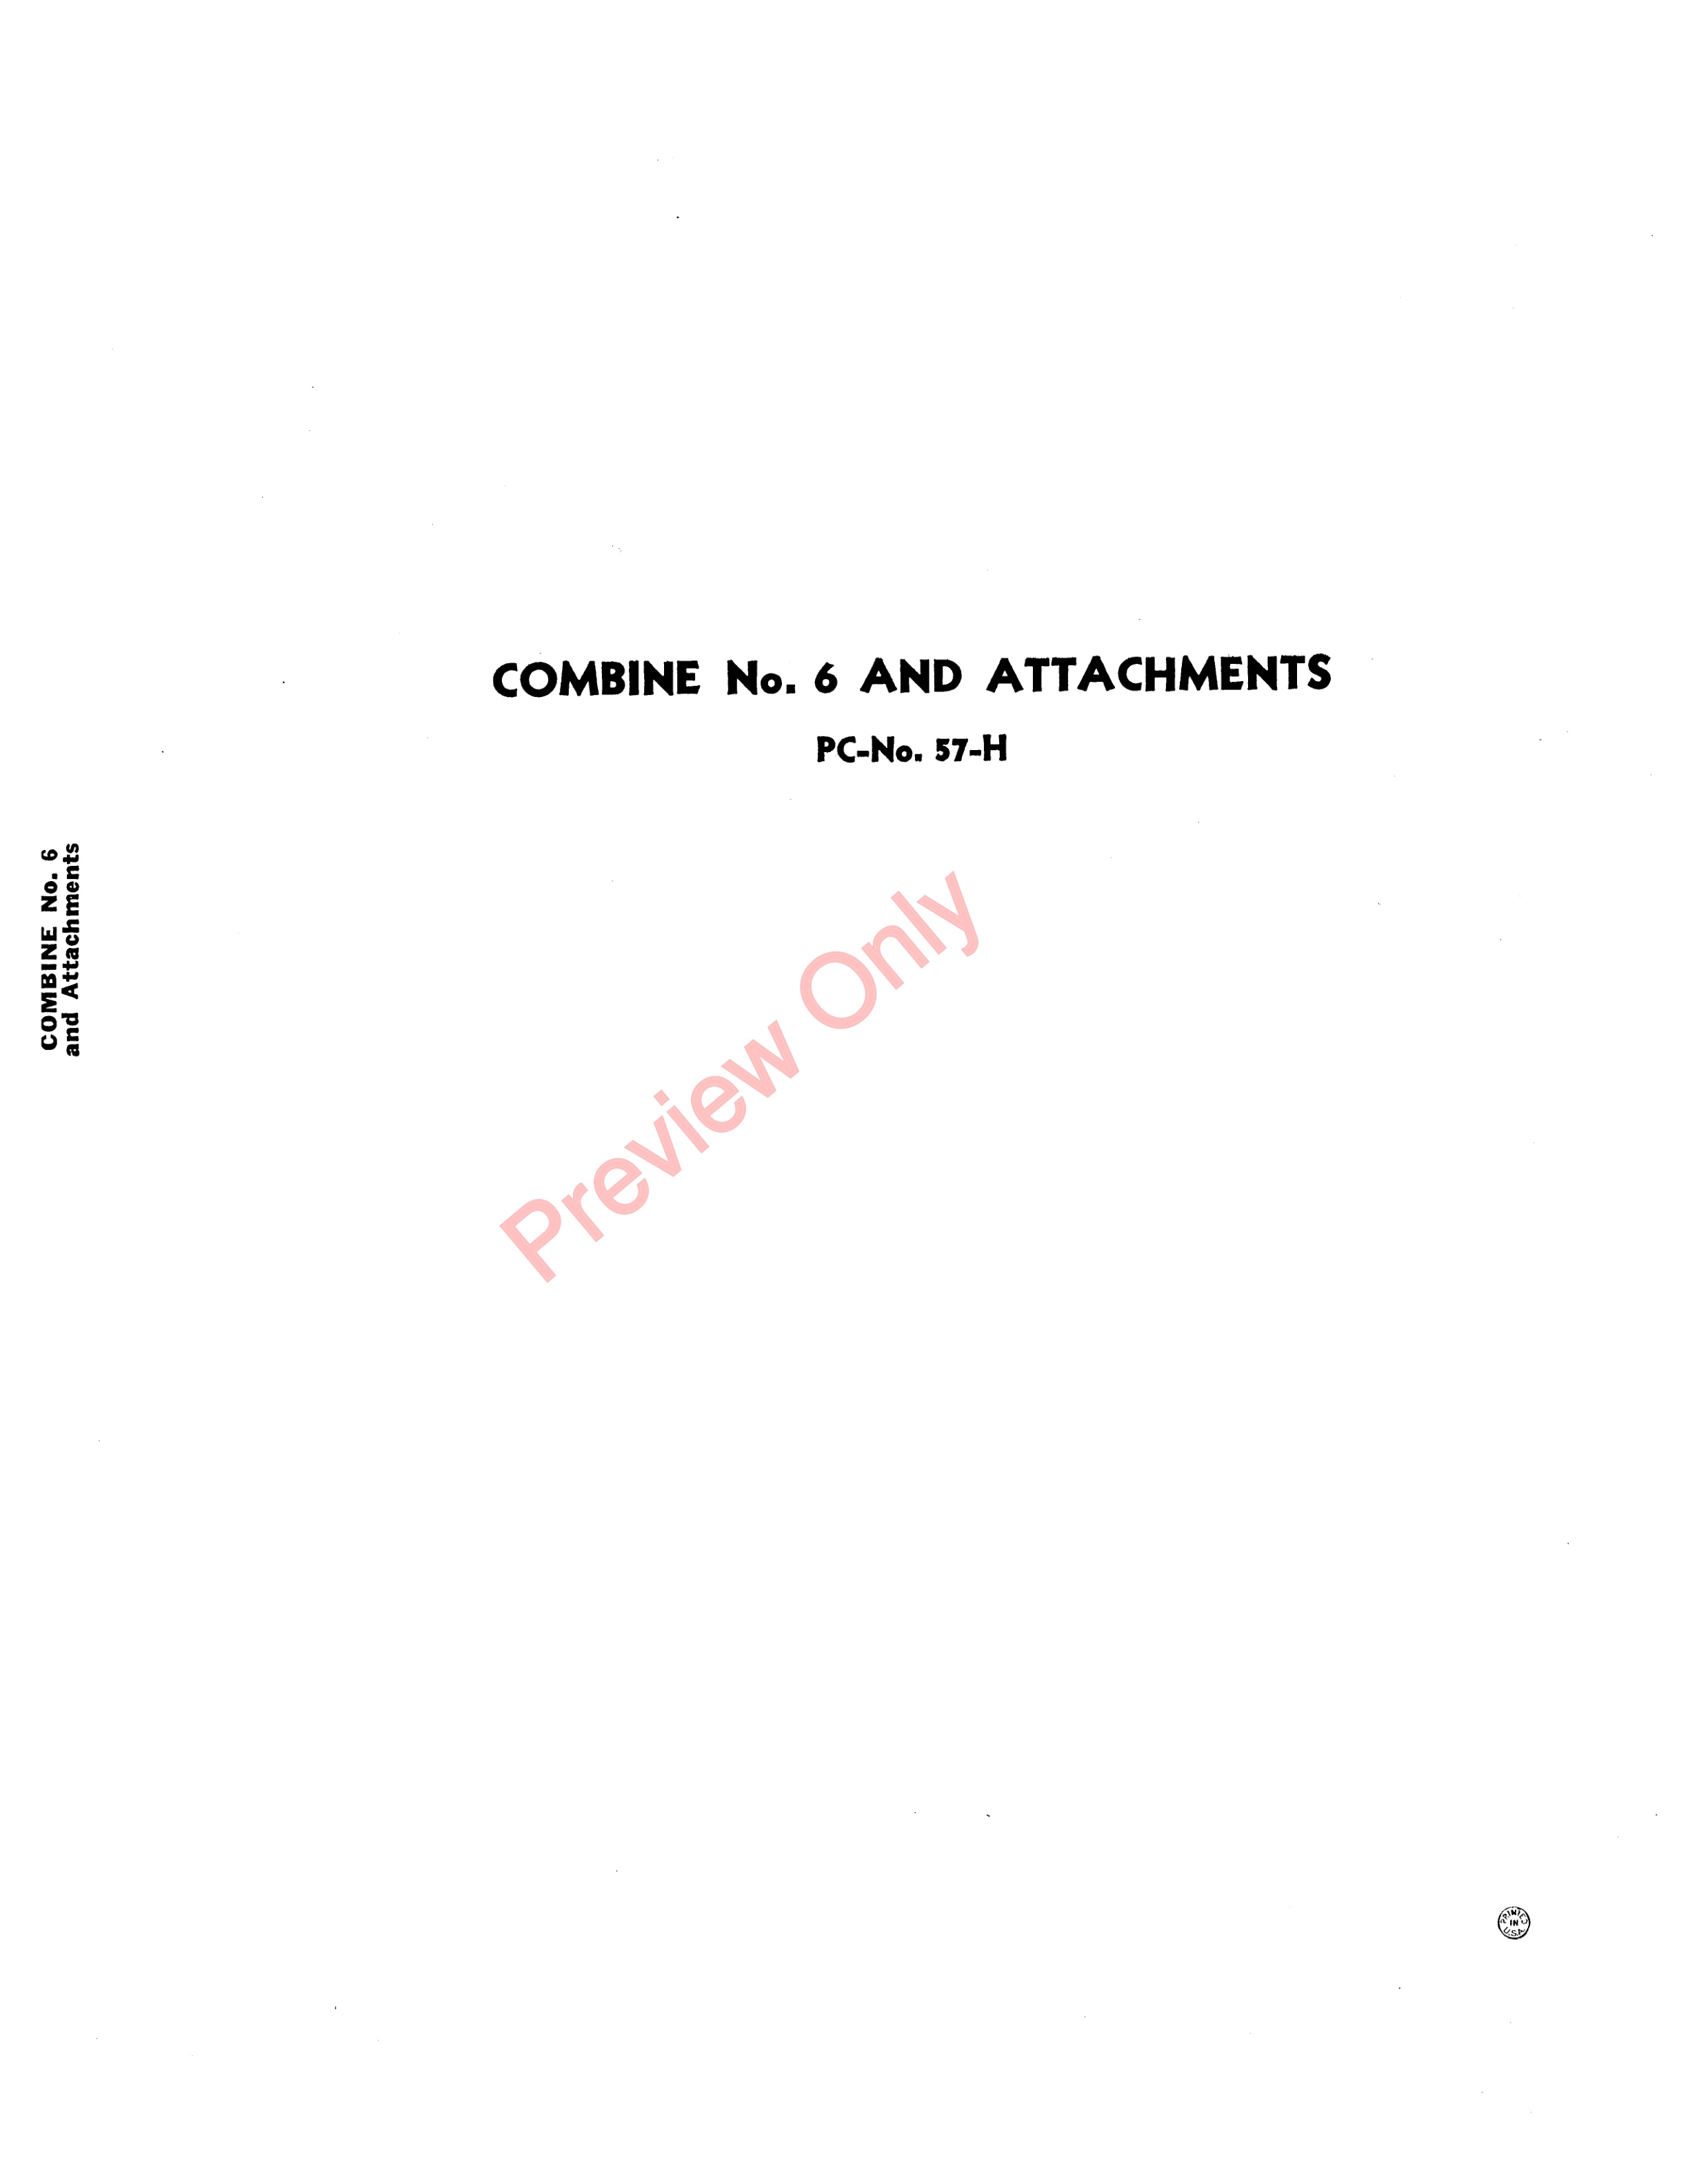 John Deere 6 Combine And Attachments Parts Catalog CAT57H 15JUL45 4